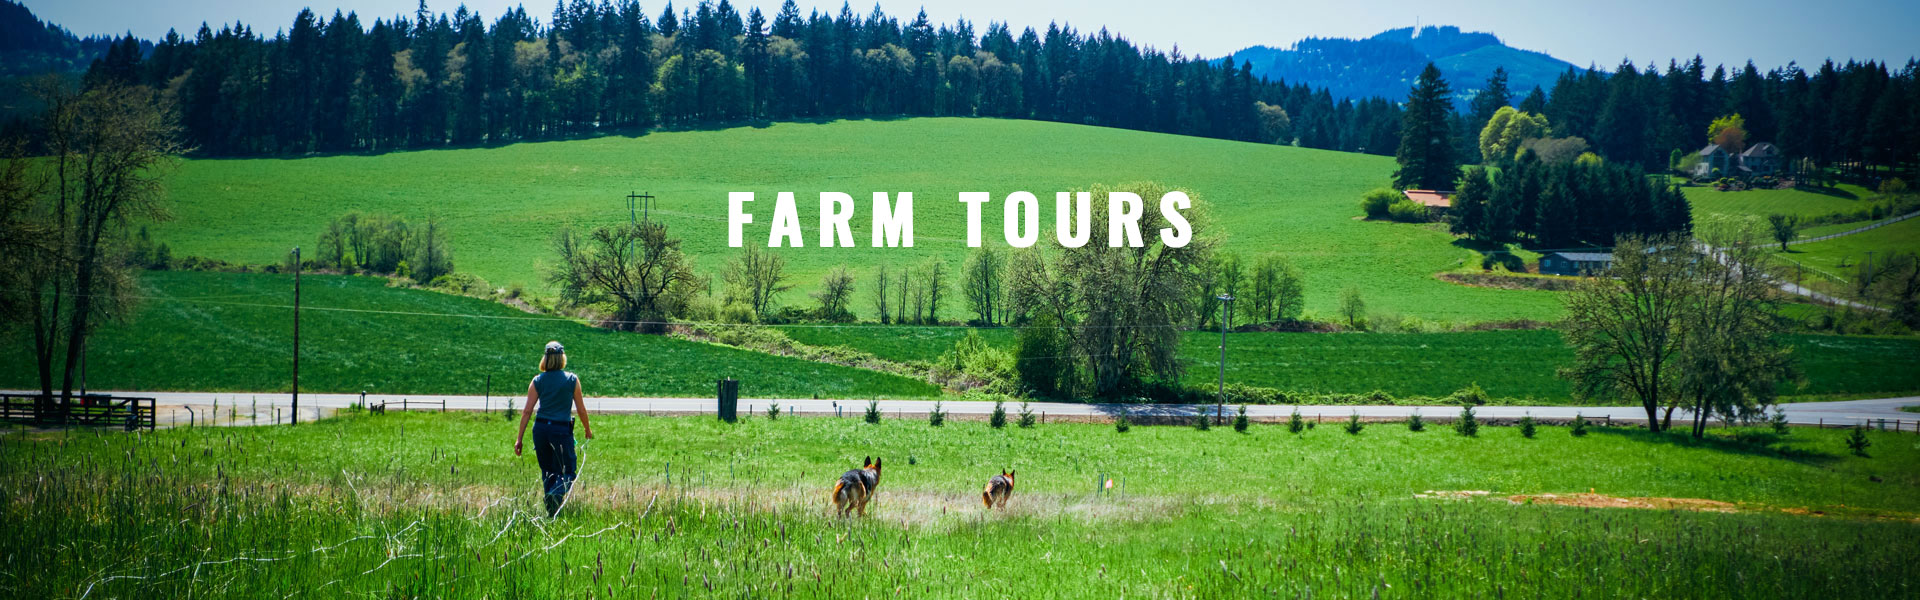 FARM TOURS Tabula Rasa Farms